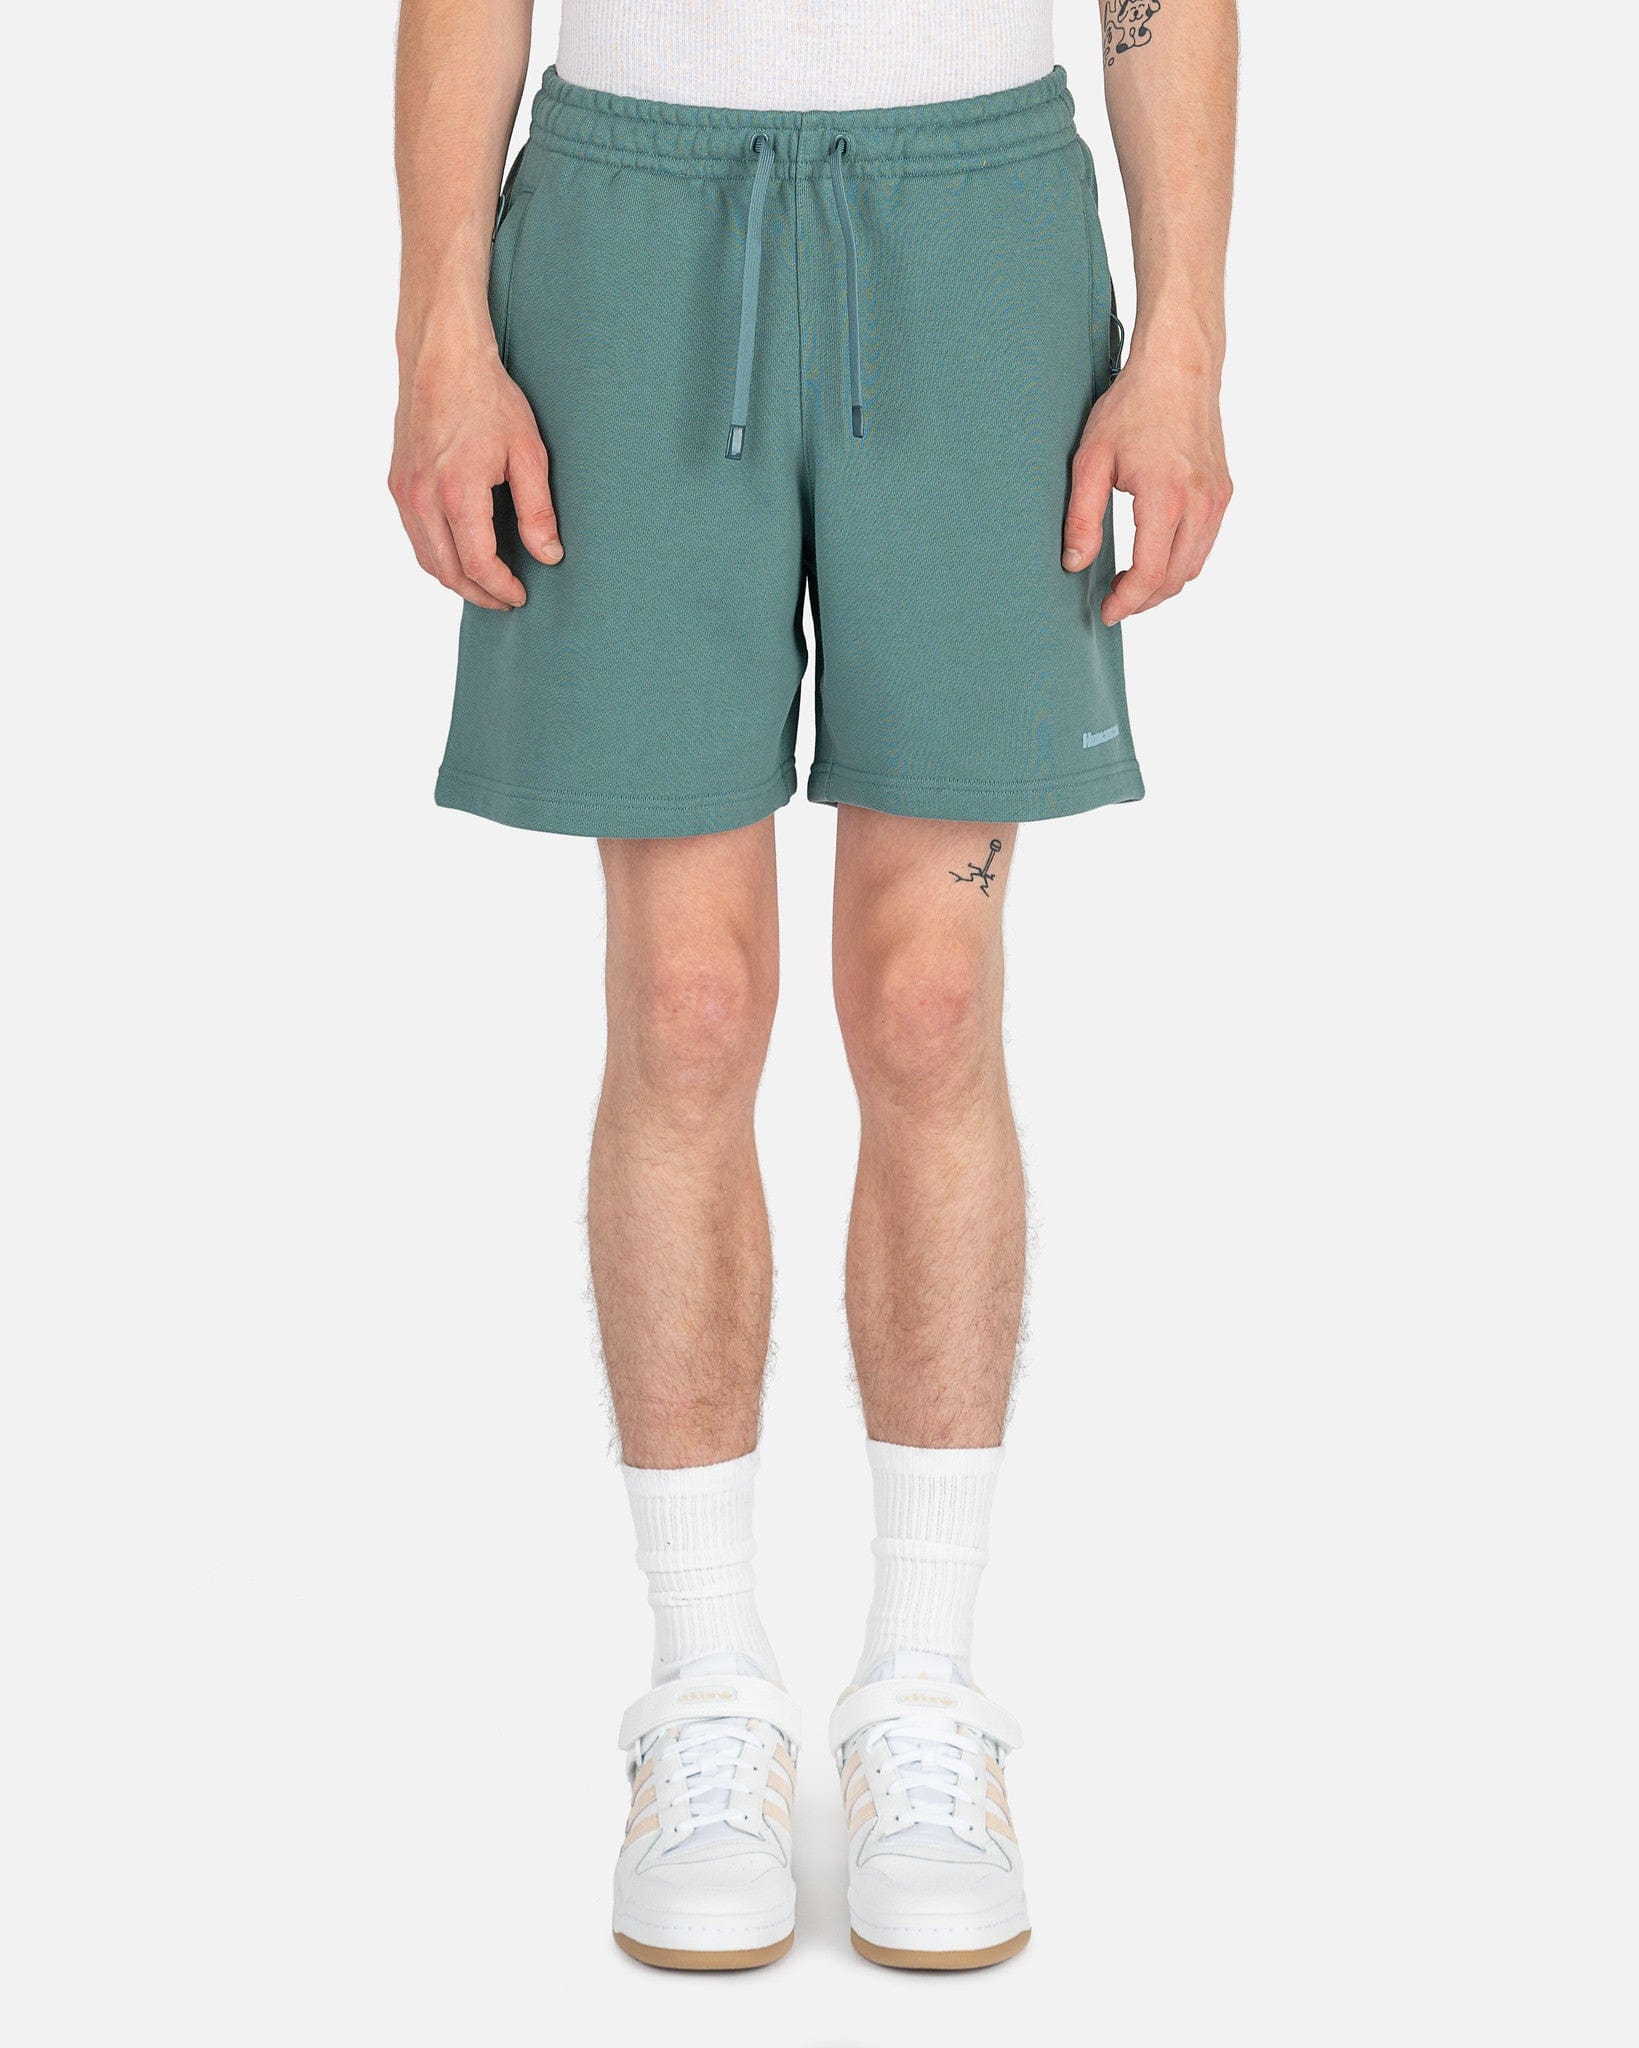 Adidas Men's Shorts Human Race Basic Shorts in Hazy Emerald